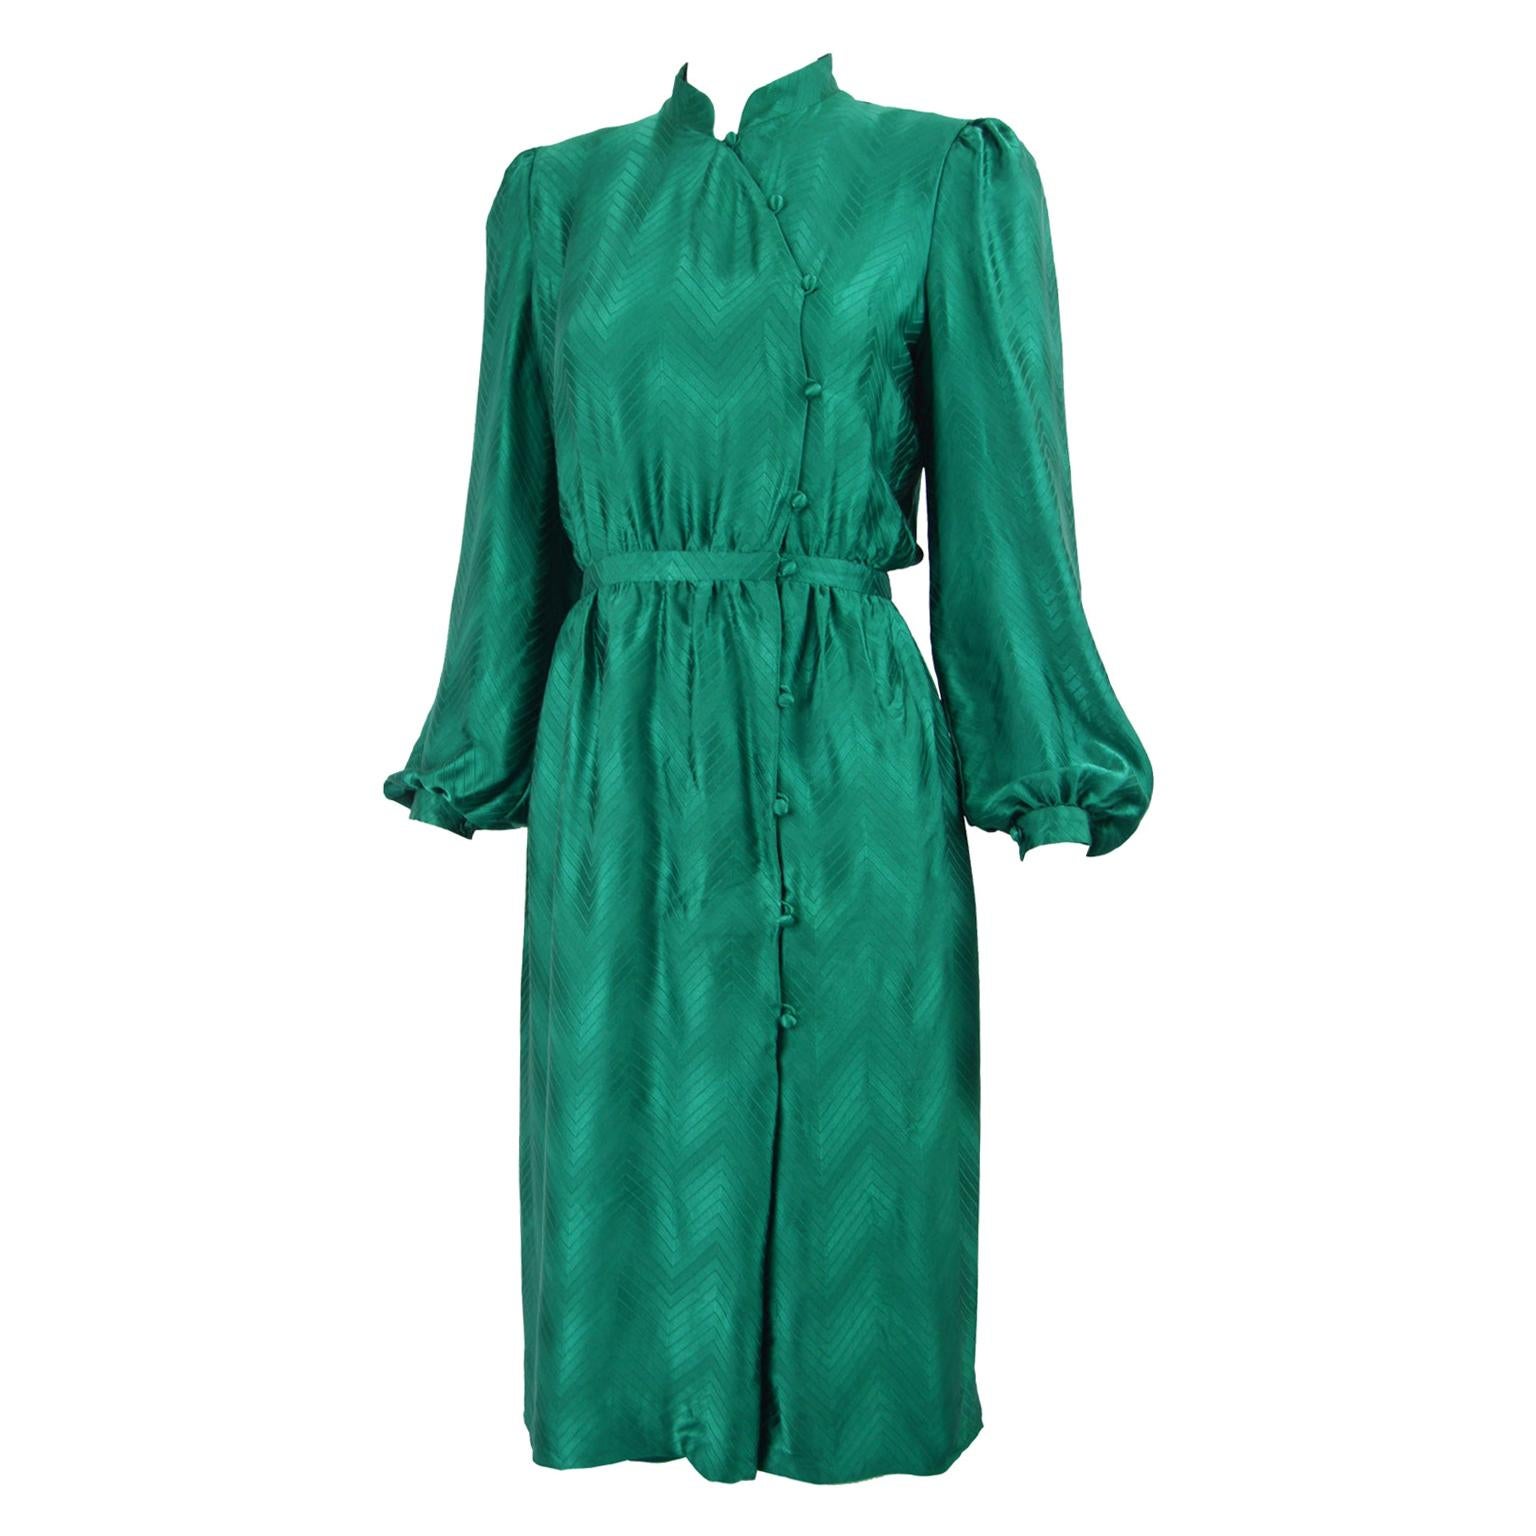 Vintage 1980s Emerald Green Silk Bishop Sleeve Collared Blouson Evening Dress